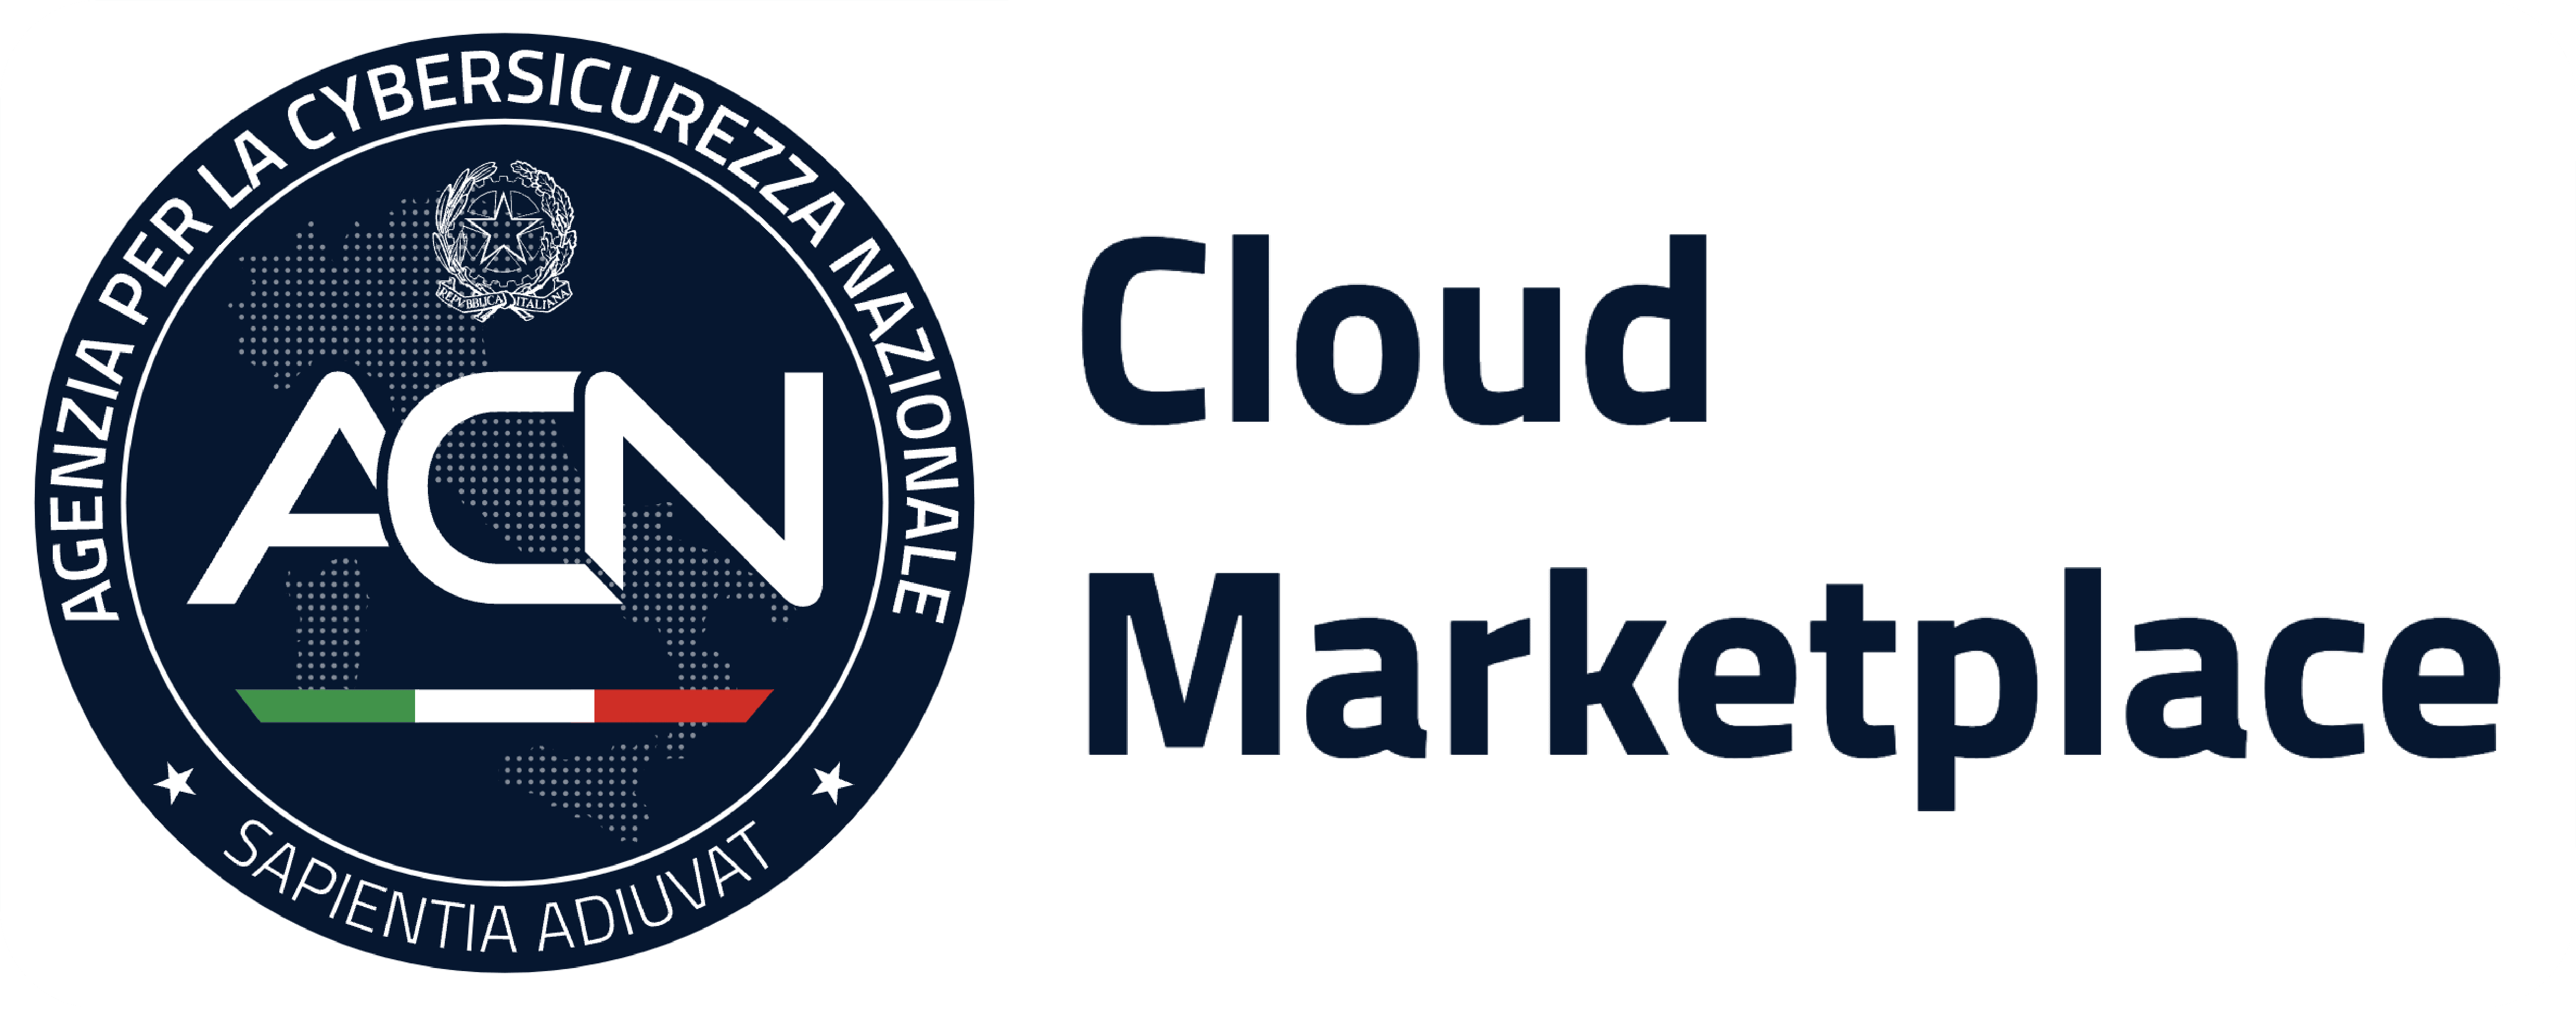 ACN - Cloud Marketplace